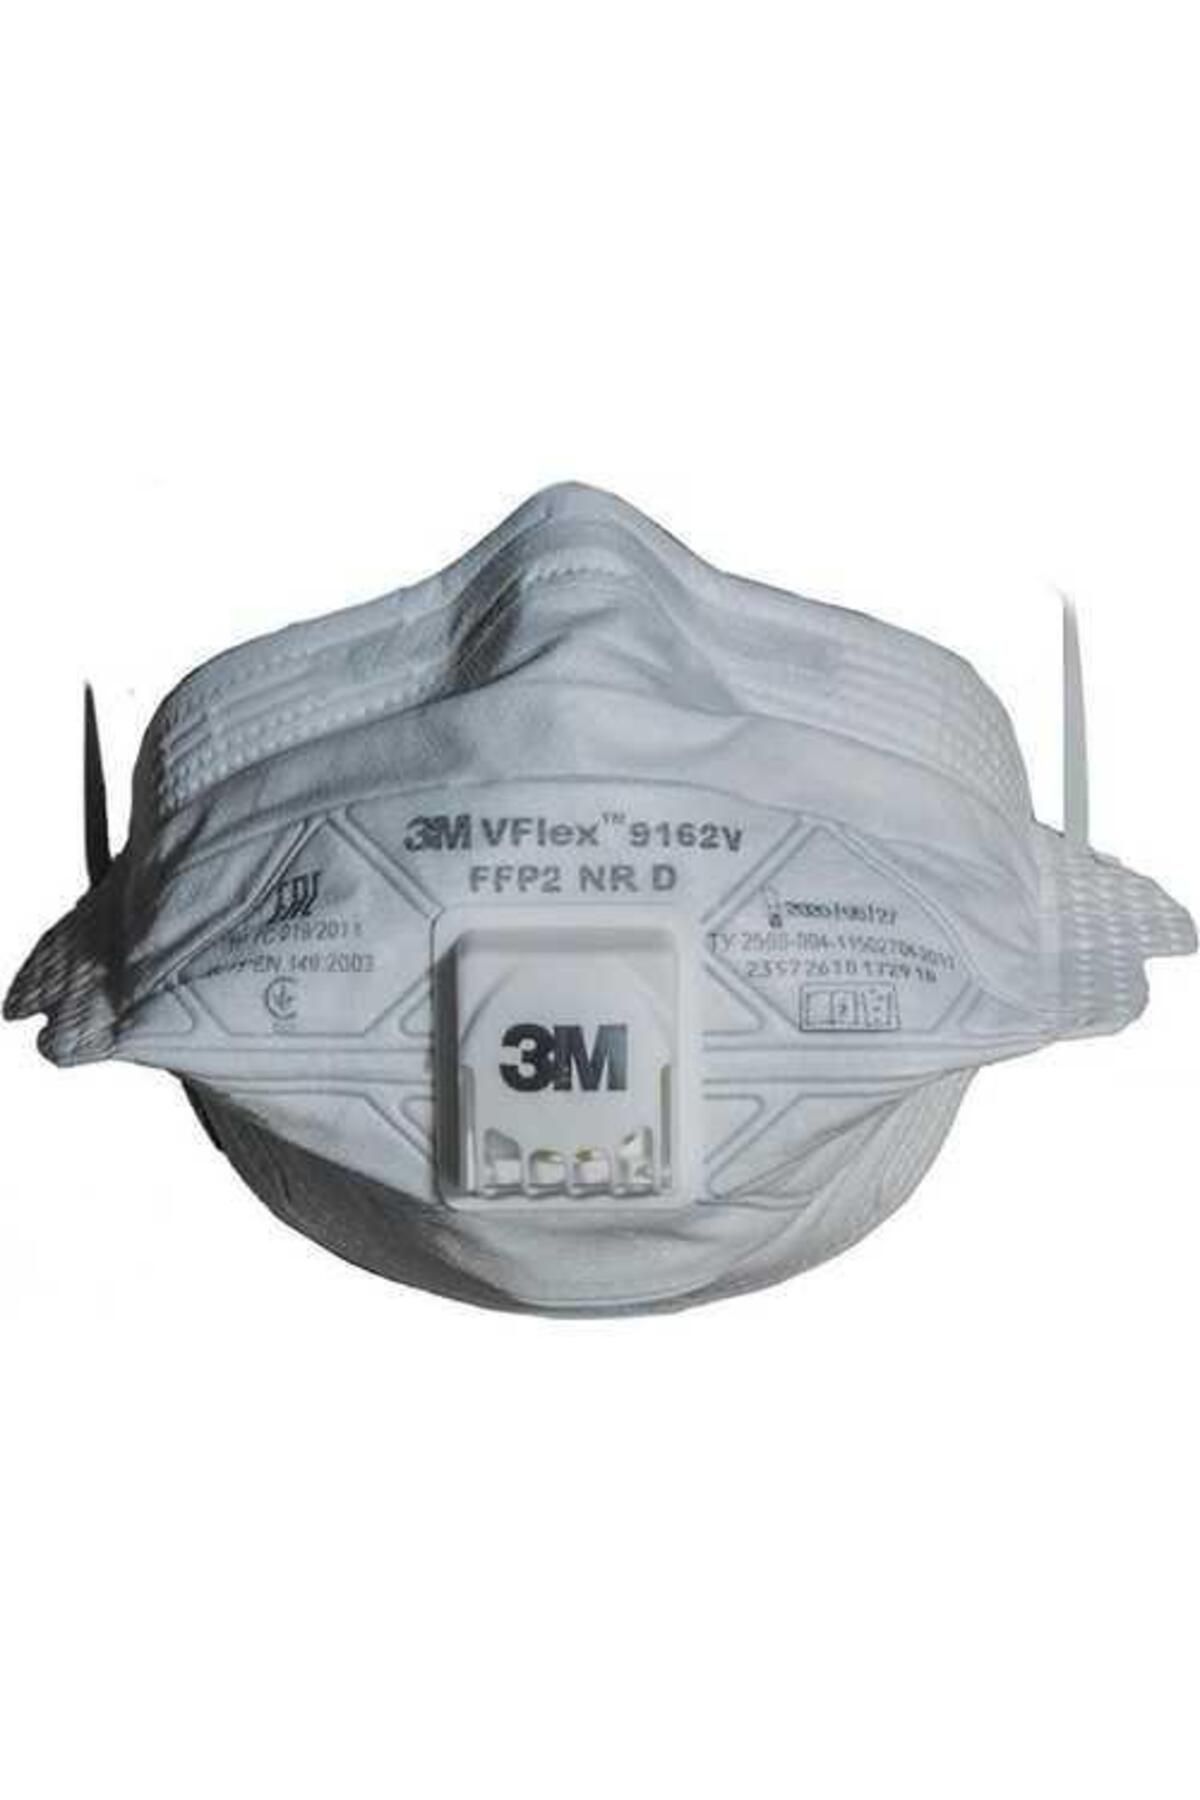 3M Vflex 9162v Ffp2 Ventilli Toz Ve Sis Maskesi Paket Içi 15 Adet